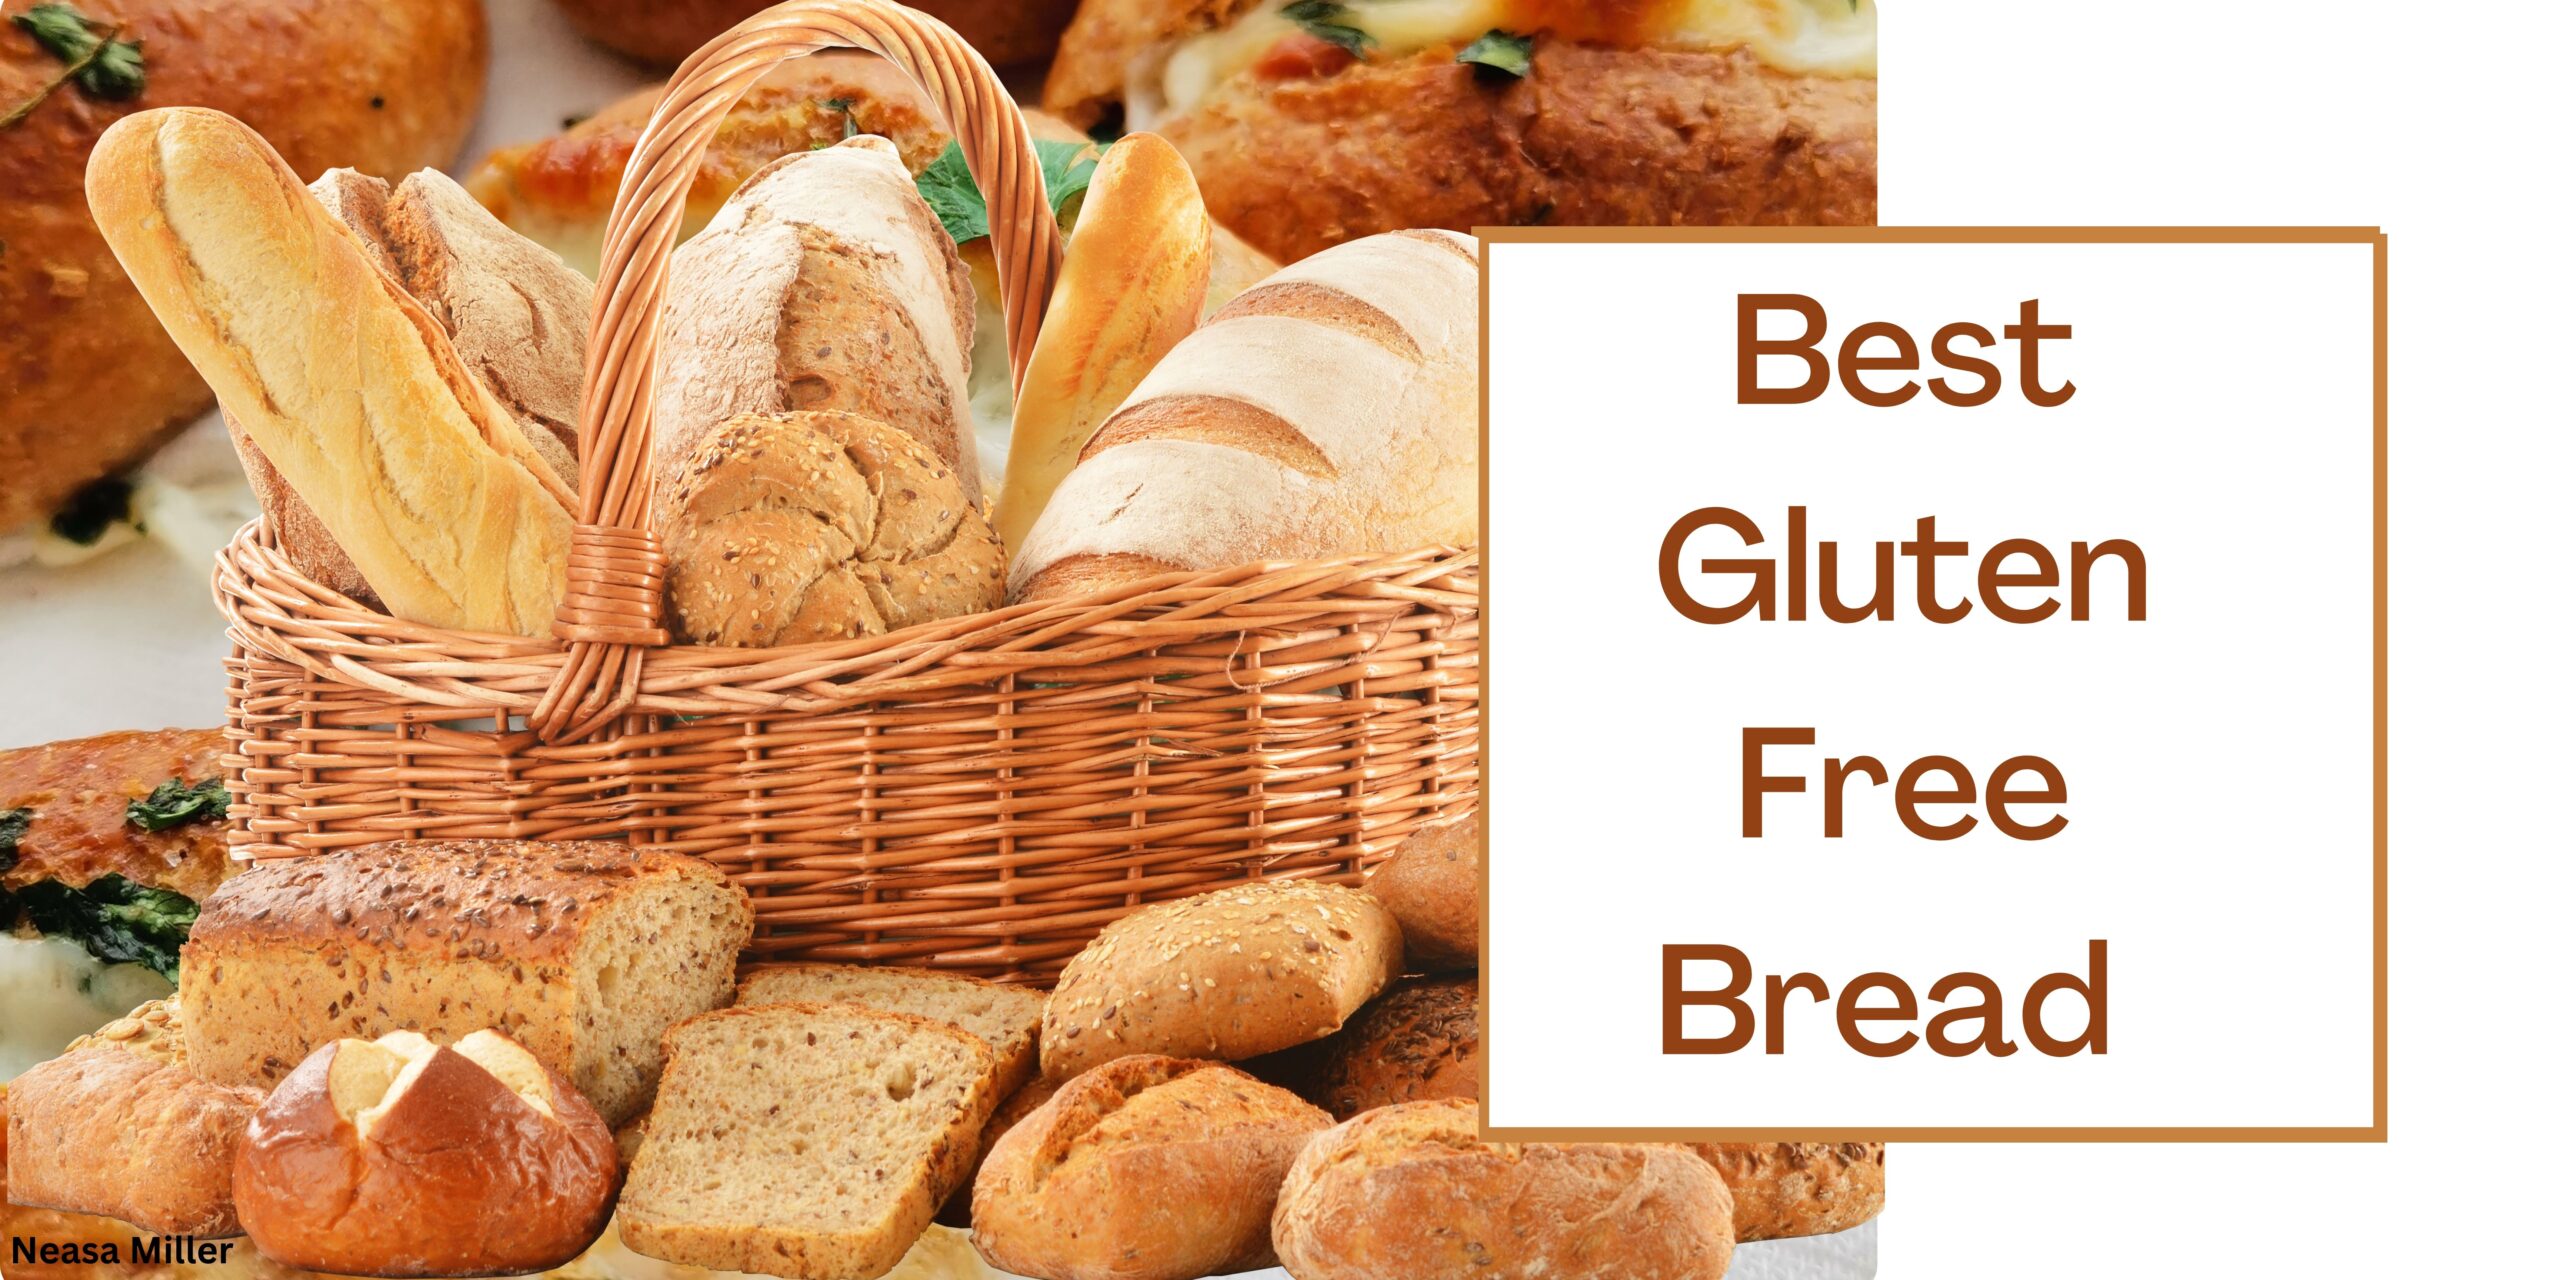 Best gluten free bread